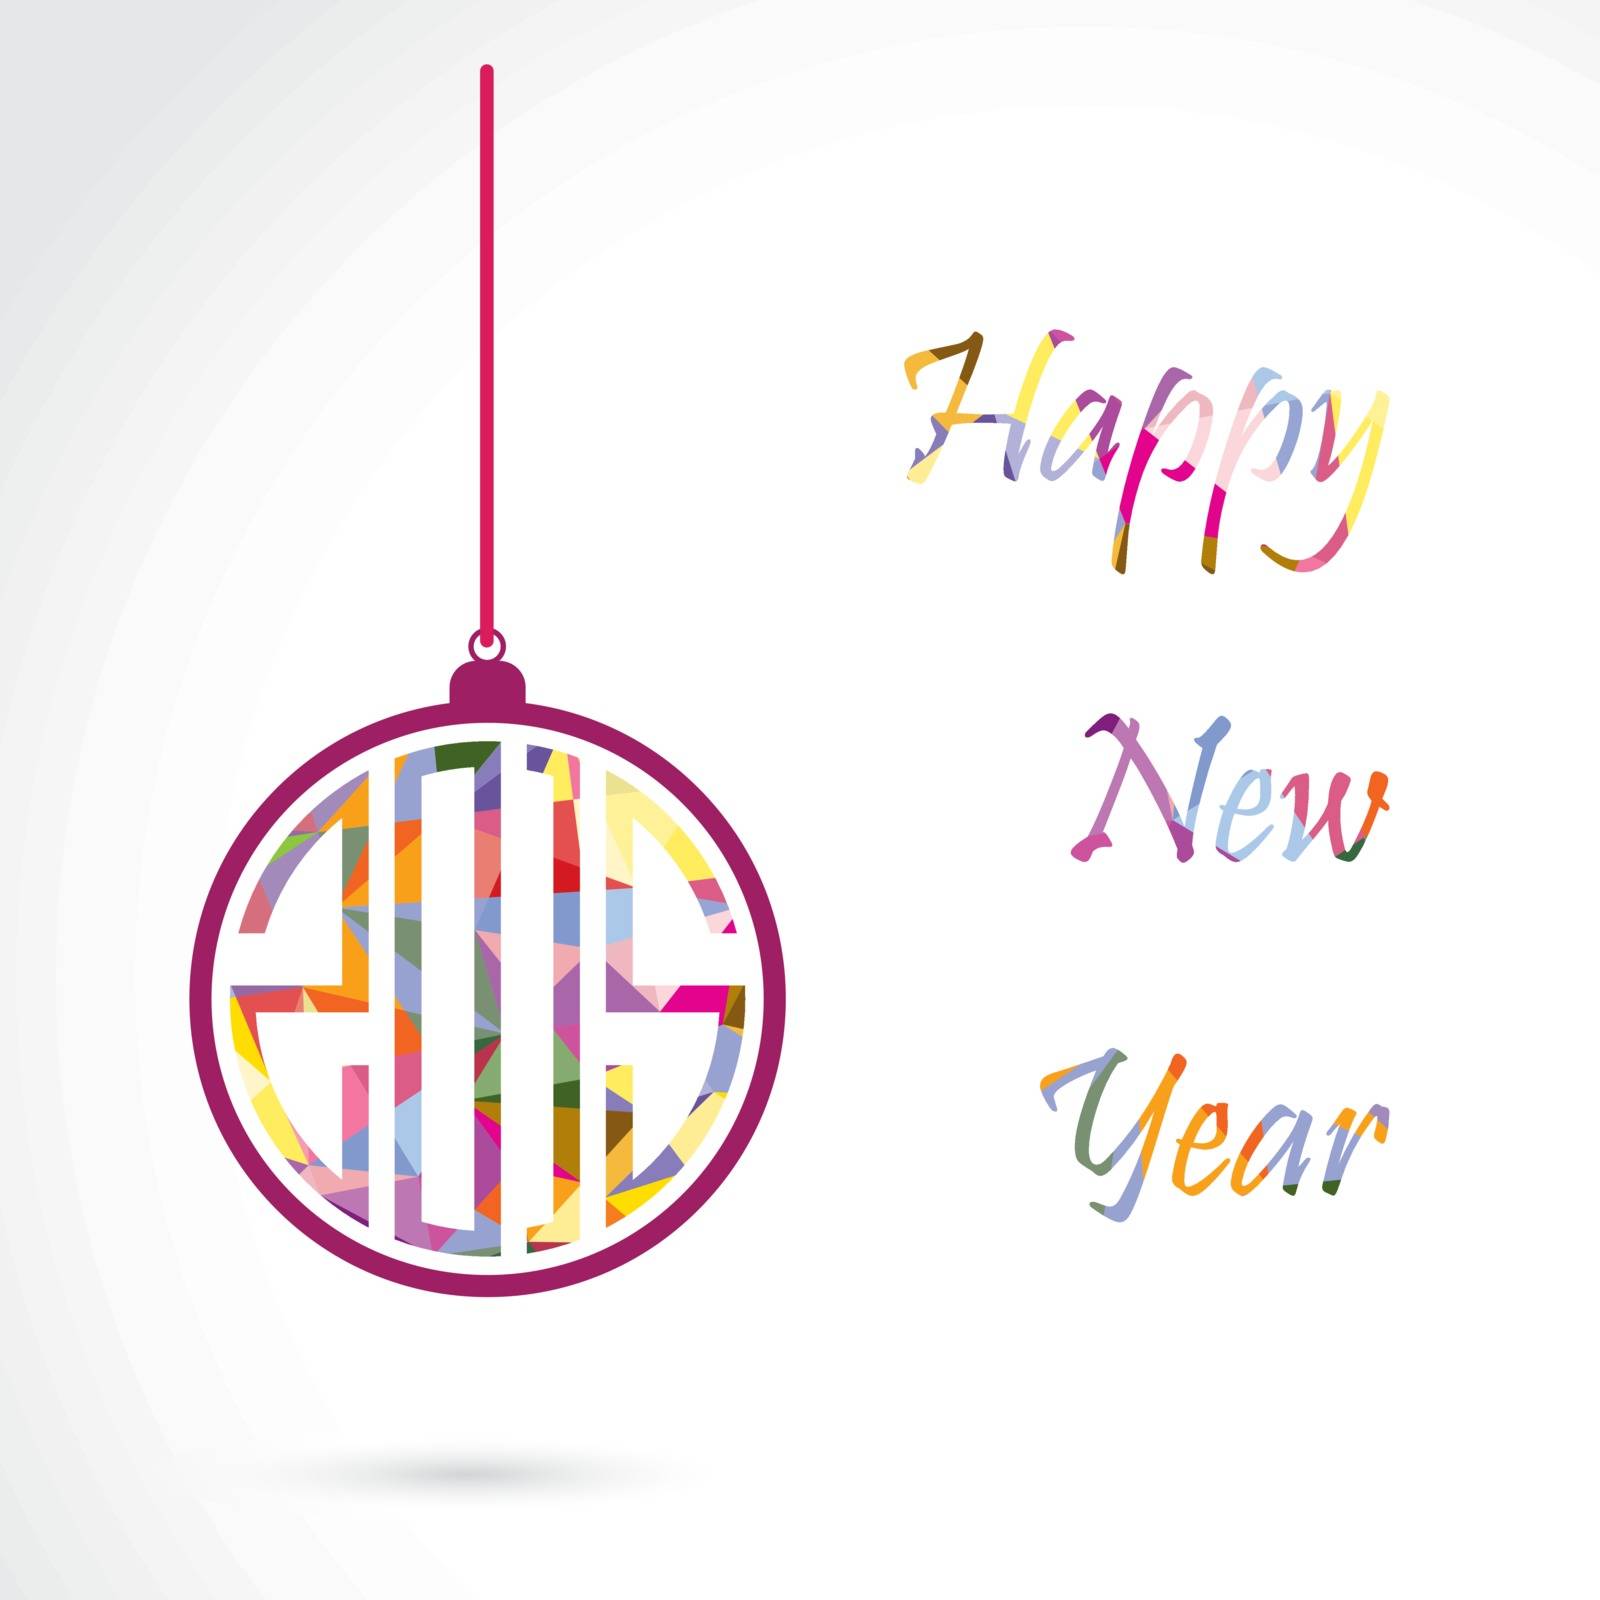 Happy new year 2015 creative greeting card design. Vector illustration